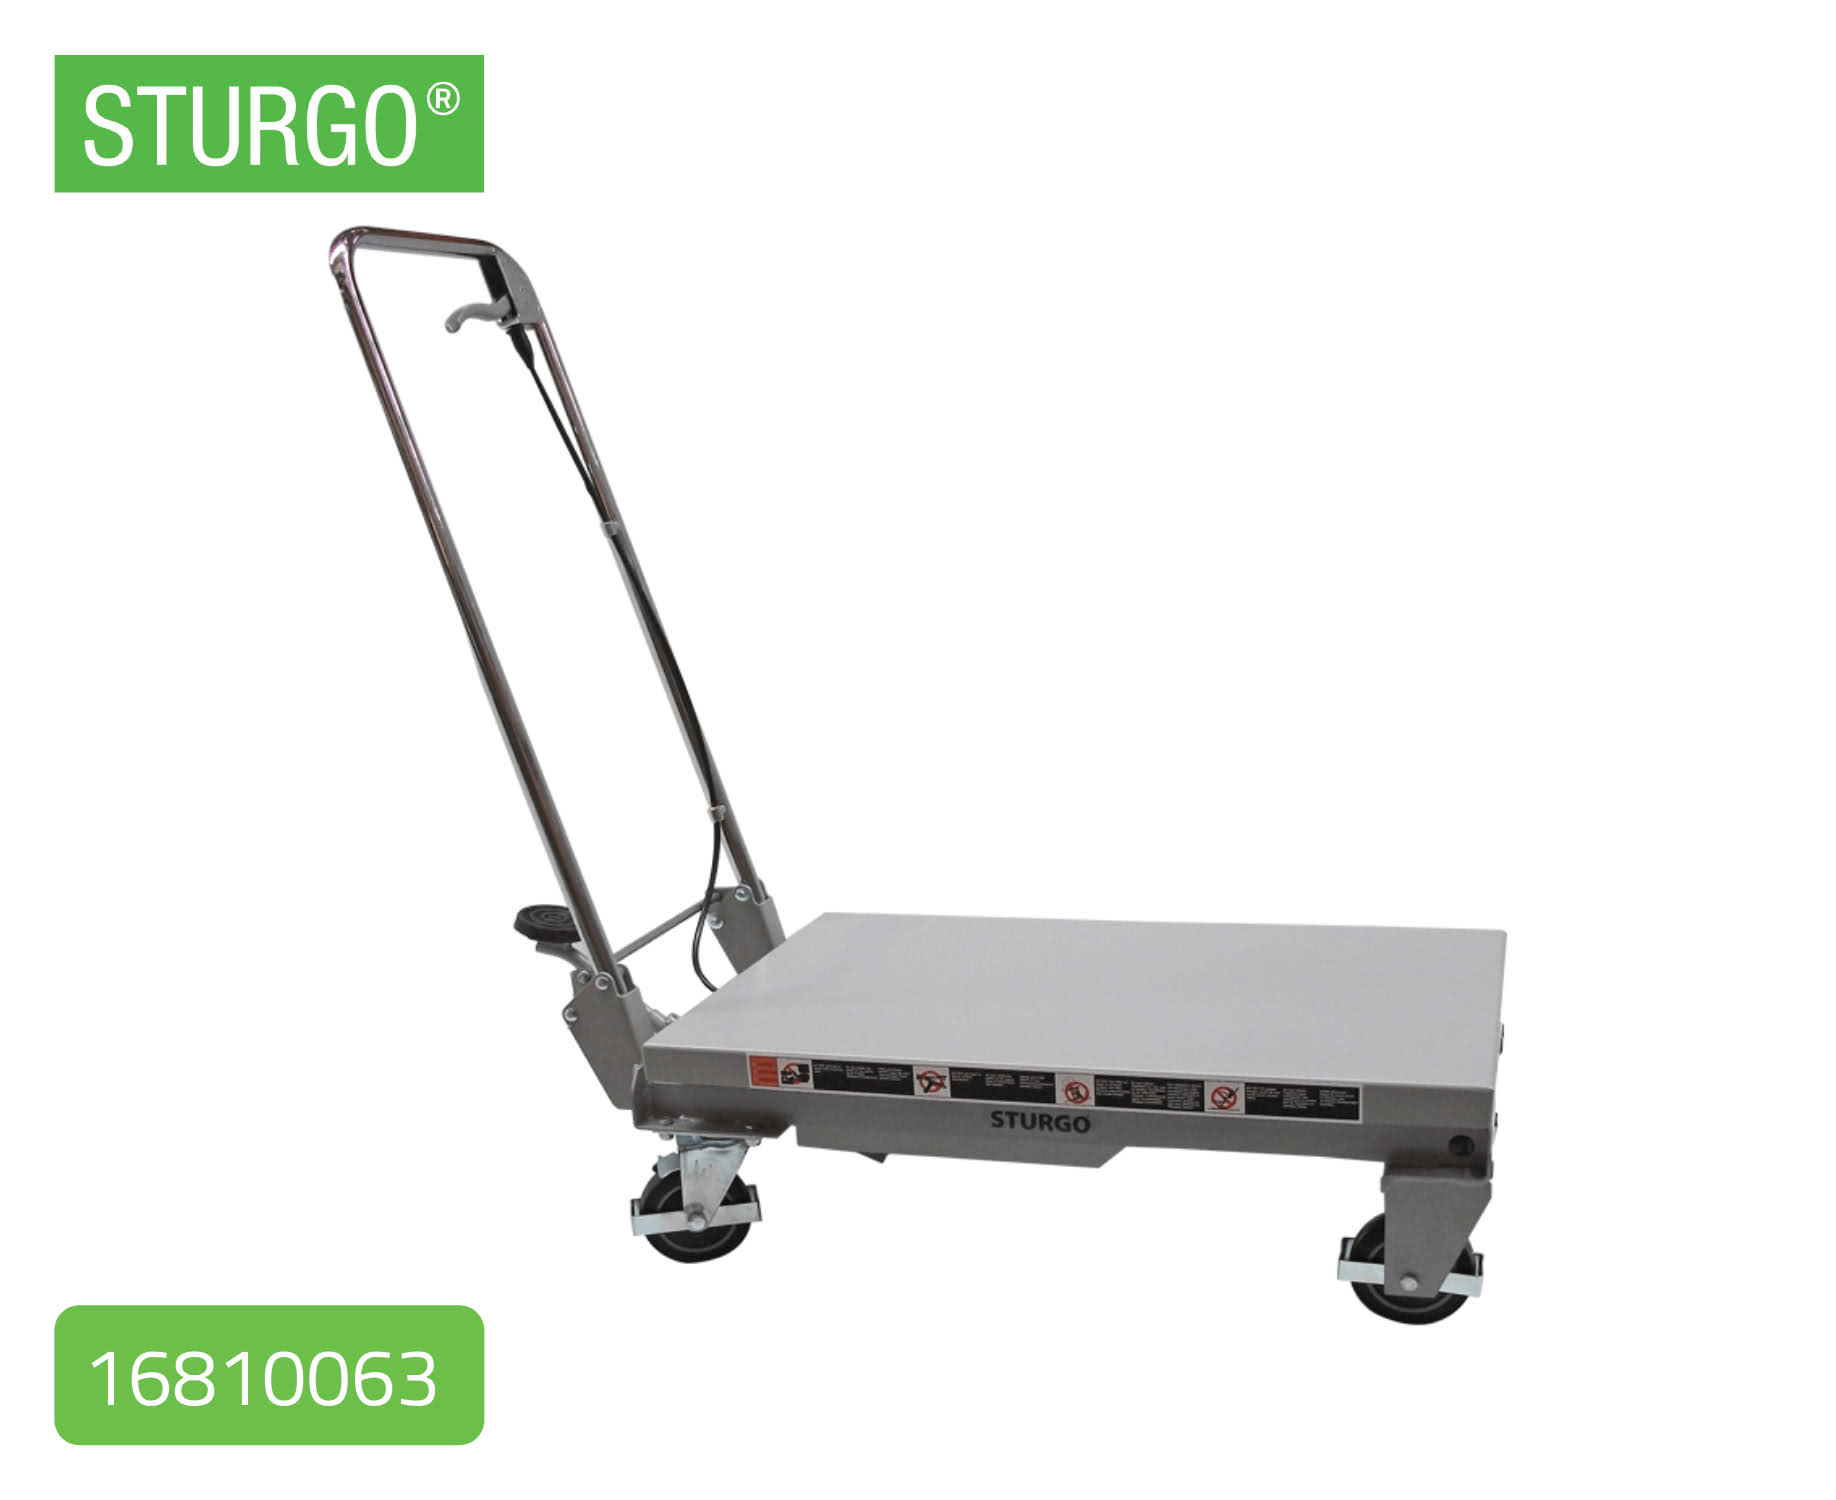 STURGO® Scissor Lift Trolley Aluminium